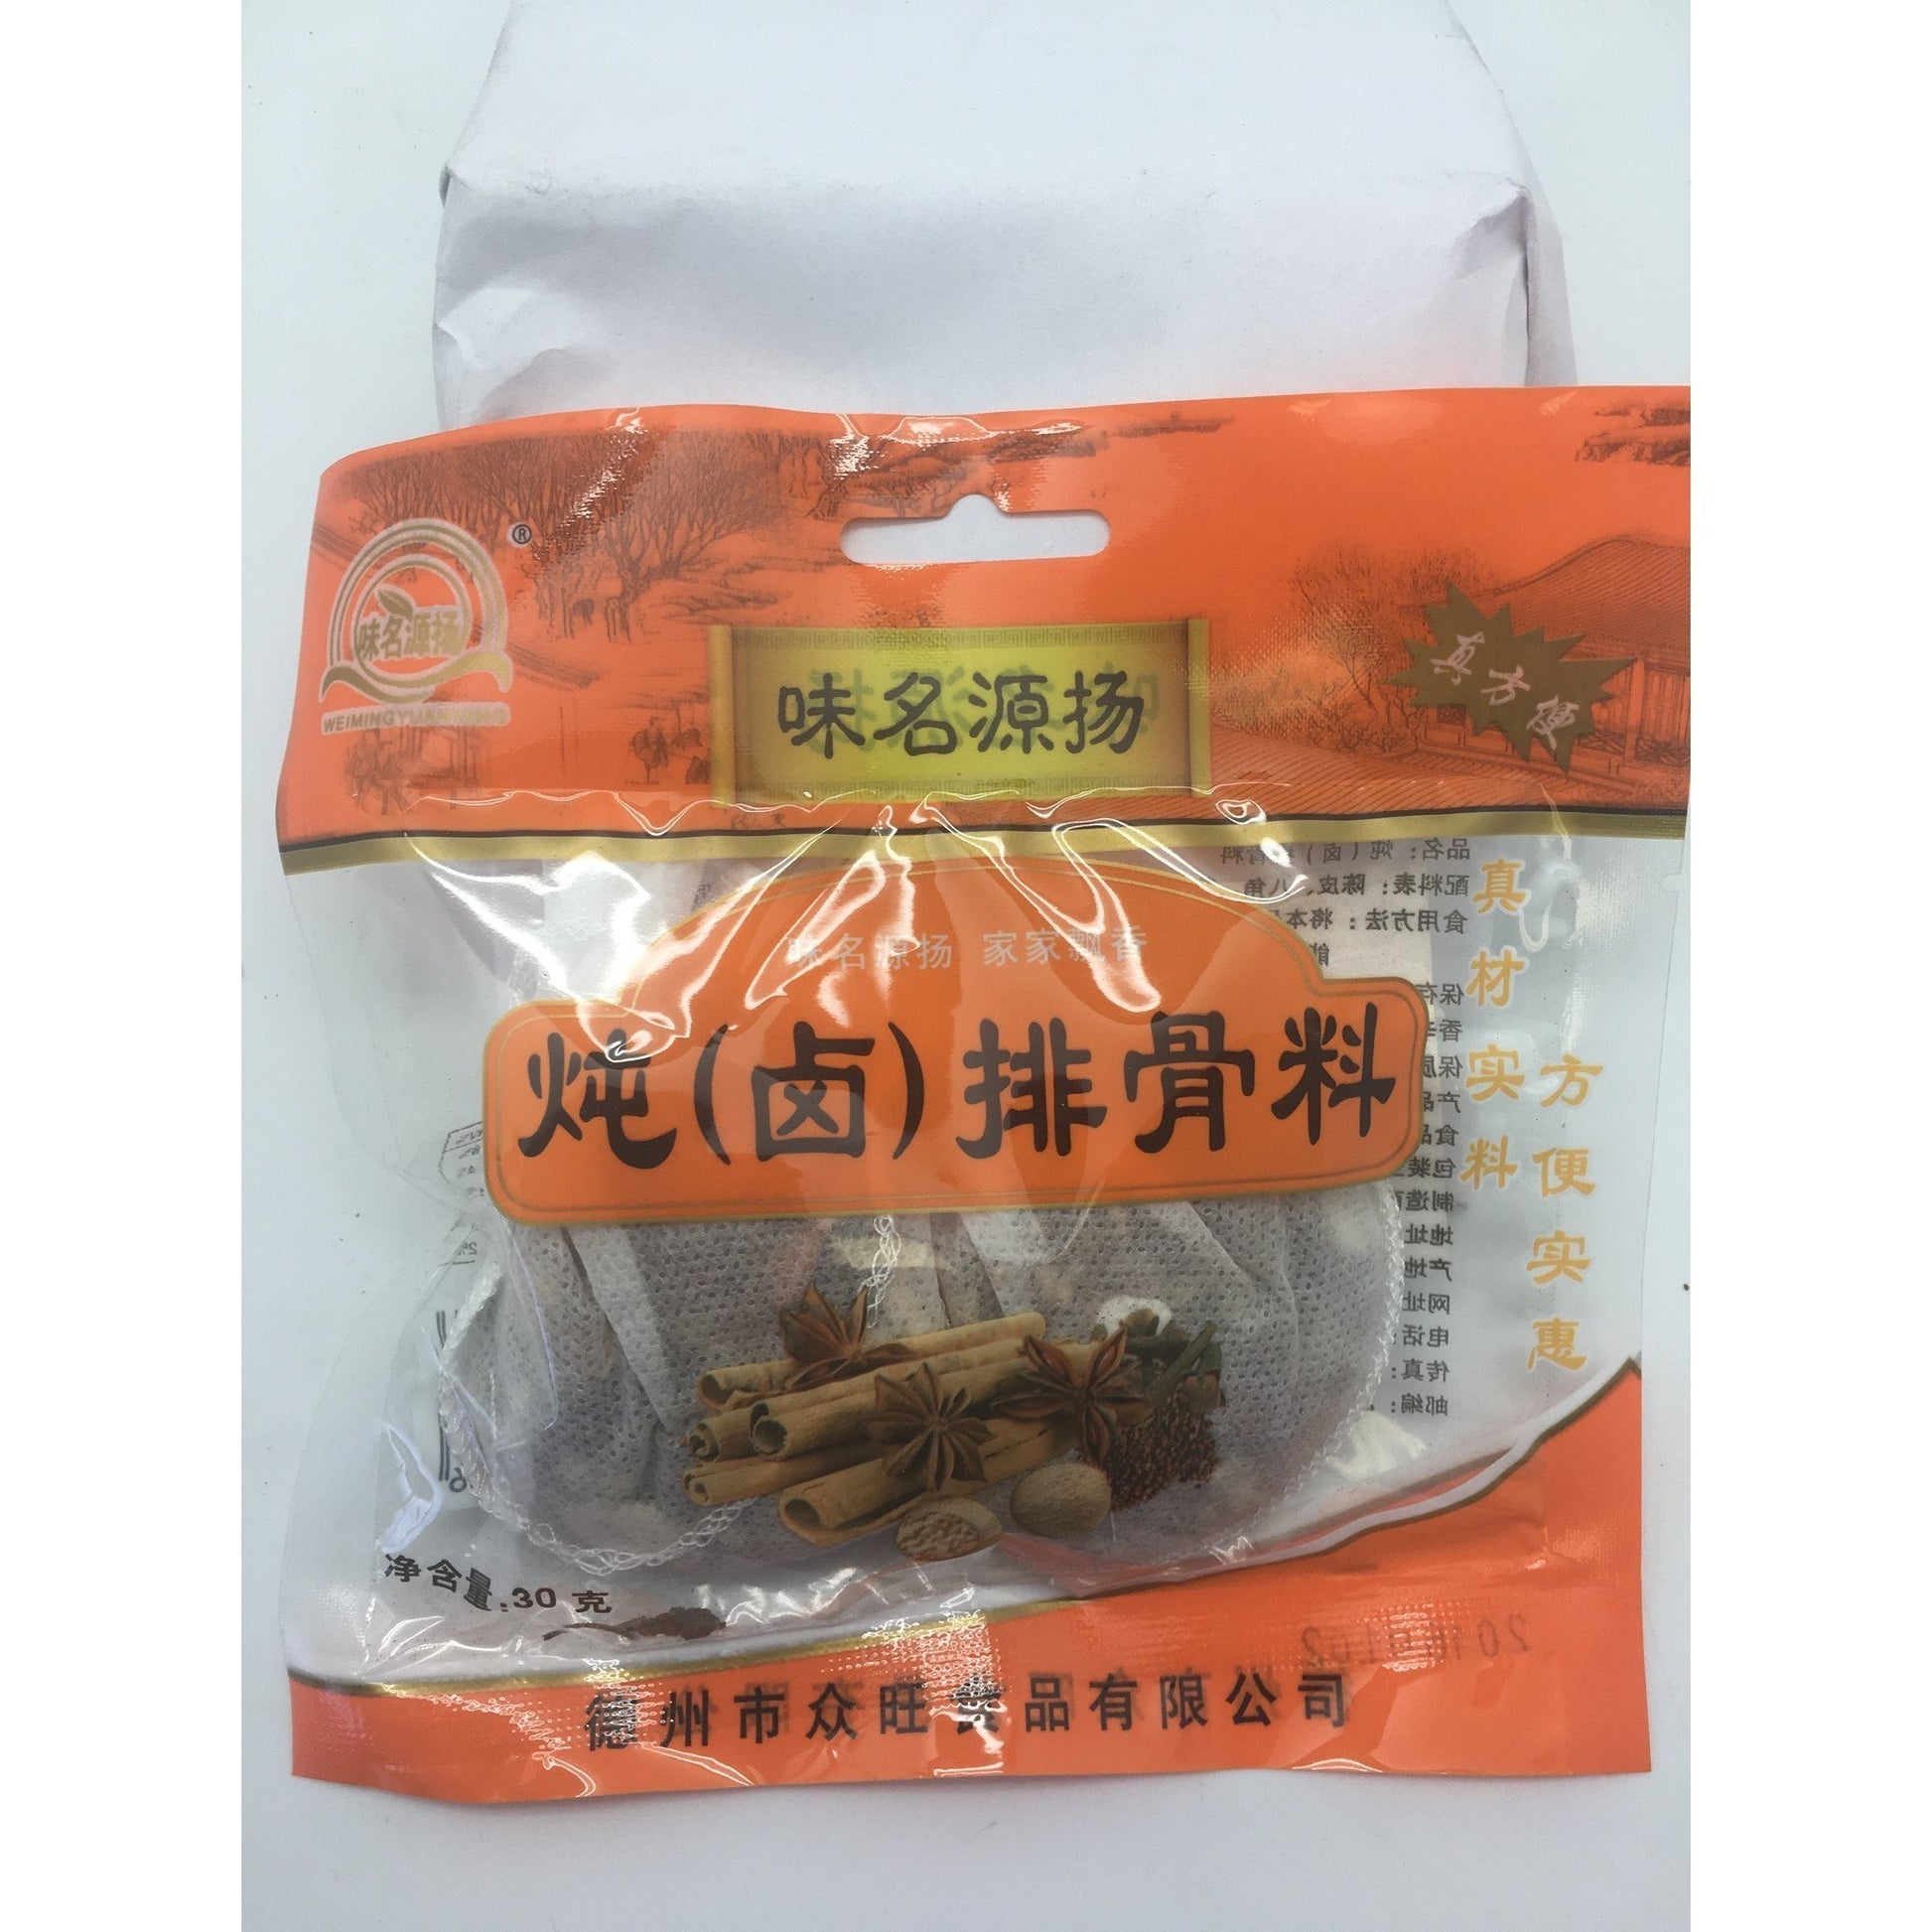 PD023T Wei Ming Yuan Yang Brand - soup mix 30g - 100 bags  / 1 CTN - New Eastland Pty Ltd - Asian food wholesalers